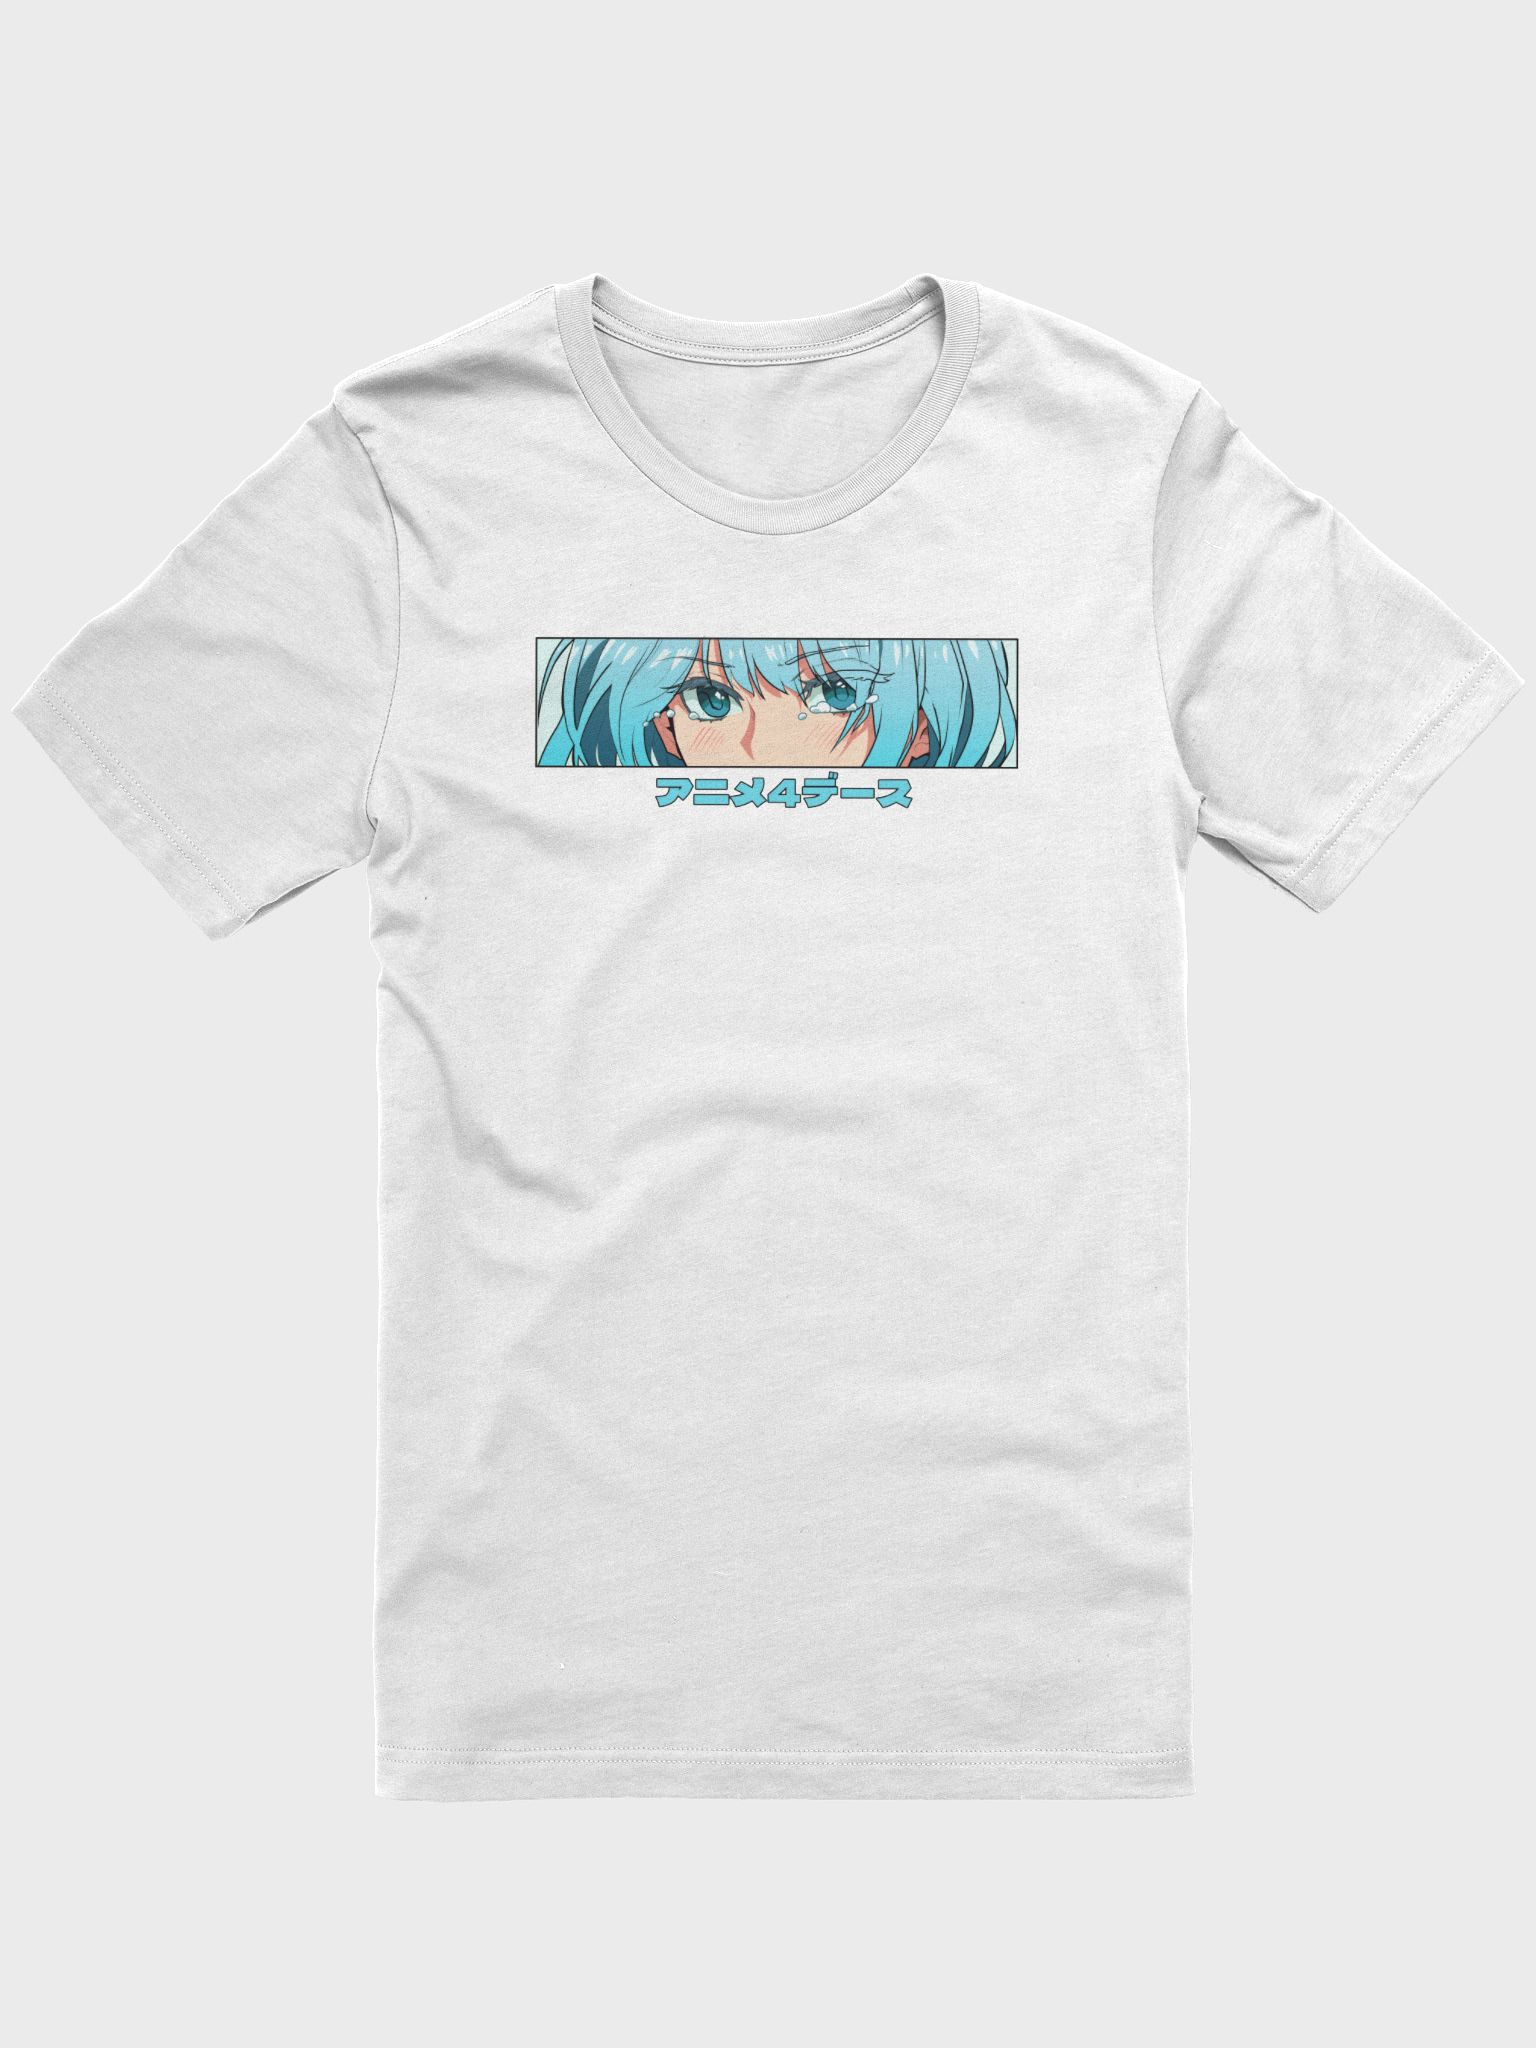 (white) T-shirt | Anime4days Anime4days